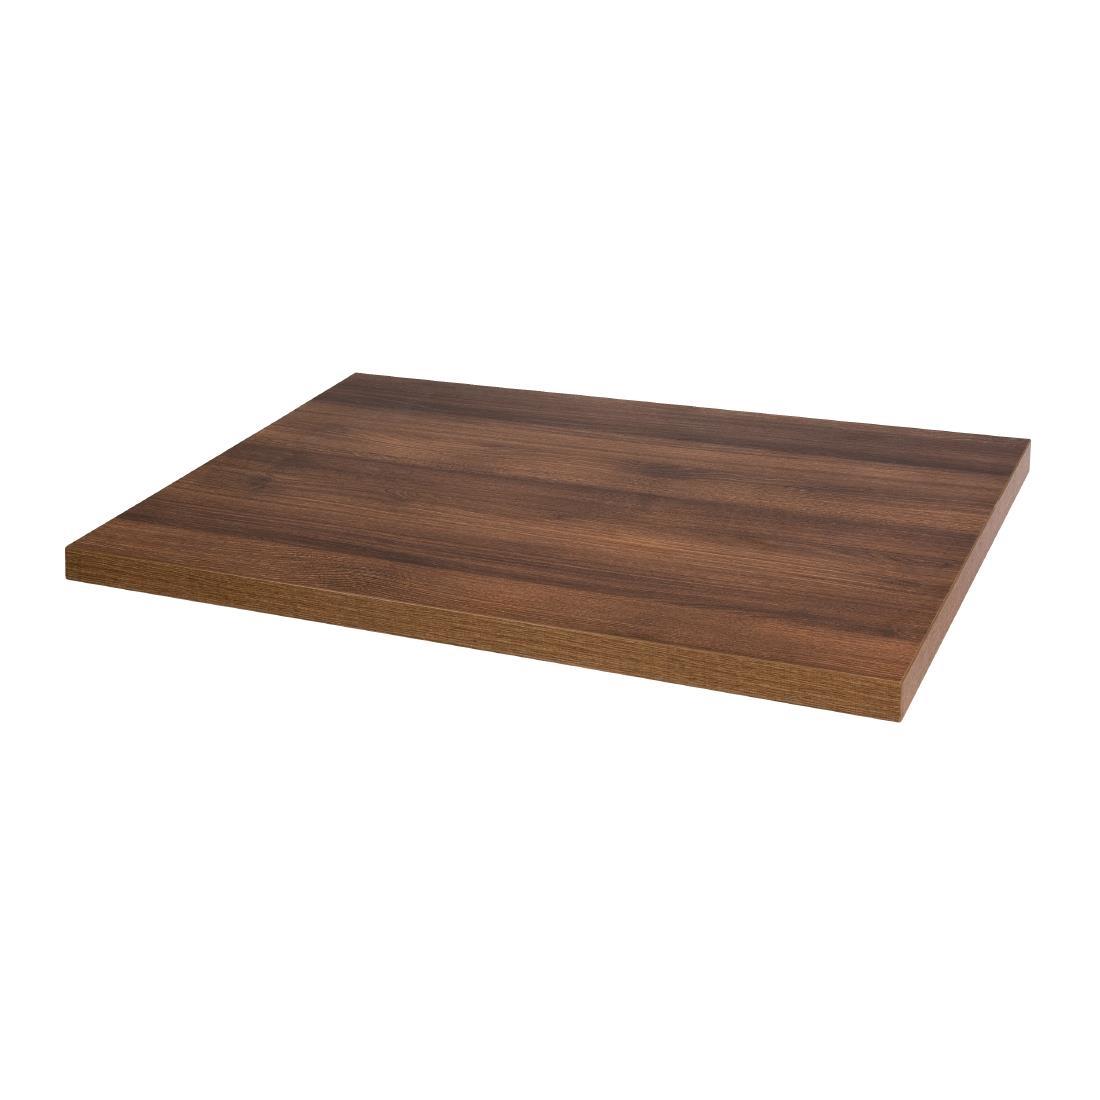 Bolero Pre-drilled Rectangular Table Top Rustic Oak 1100(W) x 700(D)mm - DT442  - 1